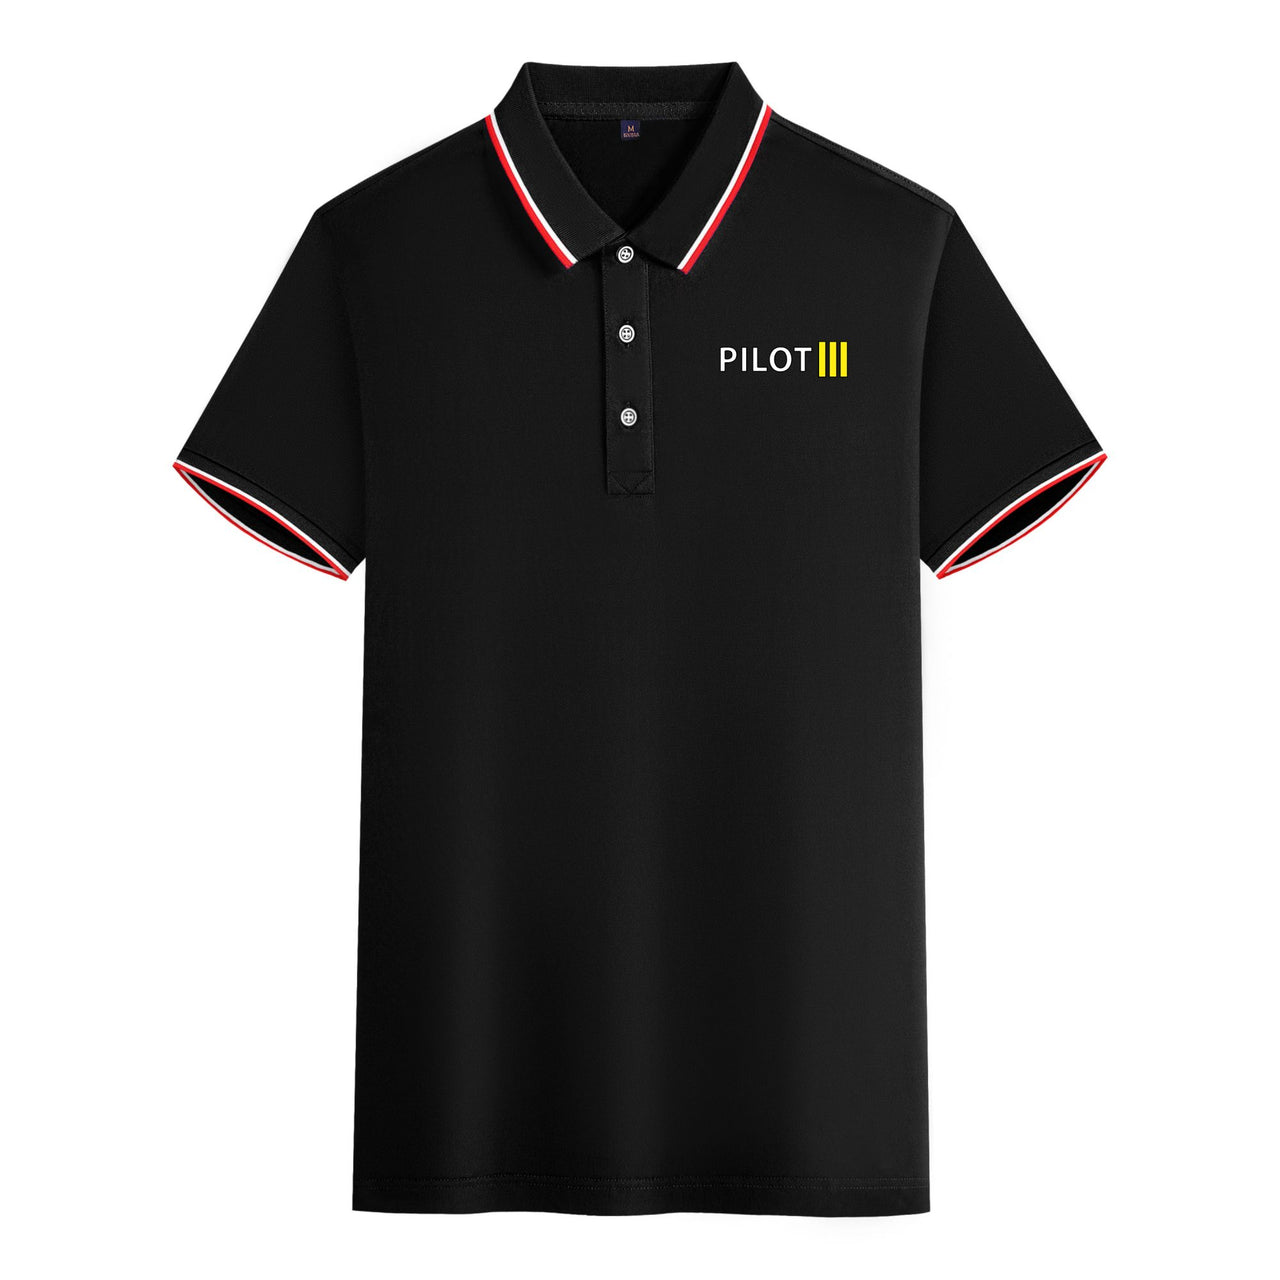 Pilot & Stripes (3 Lines) Designed Stylish Polo T-Shirts